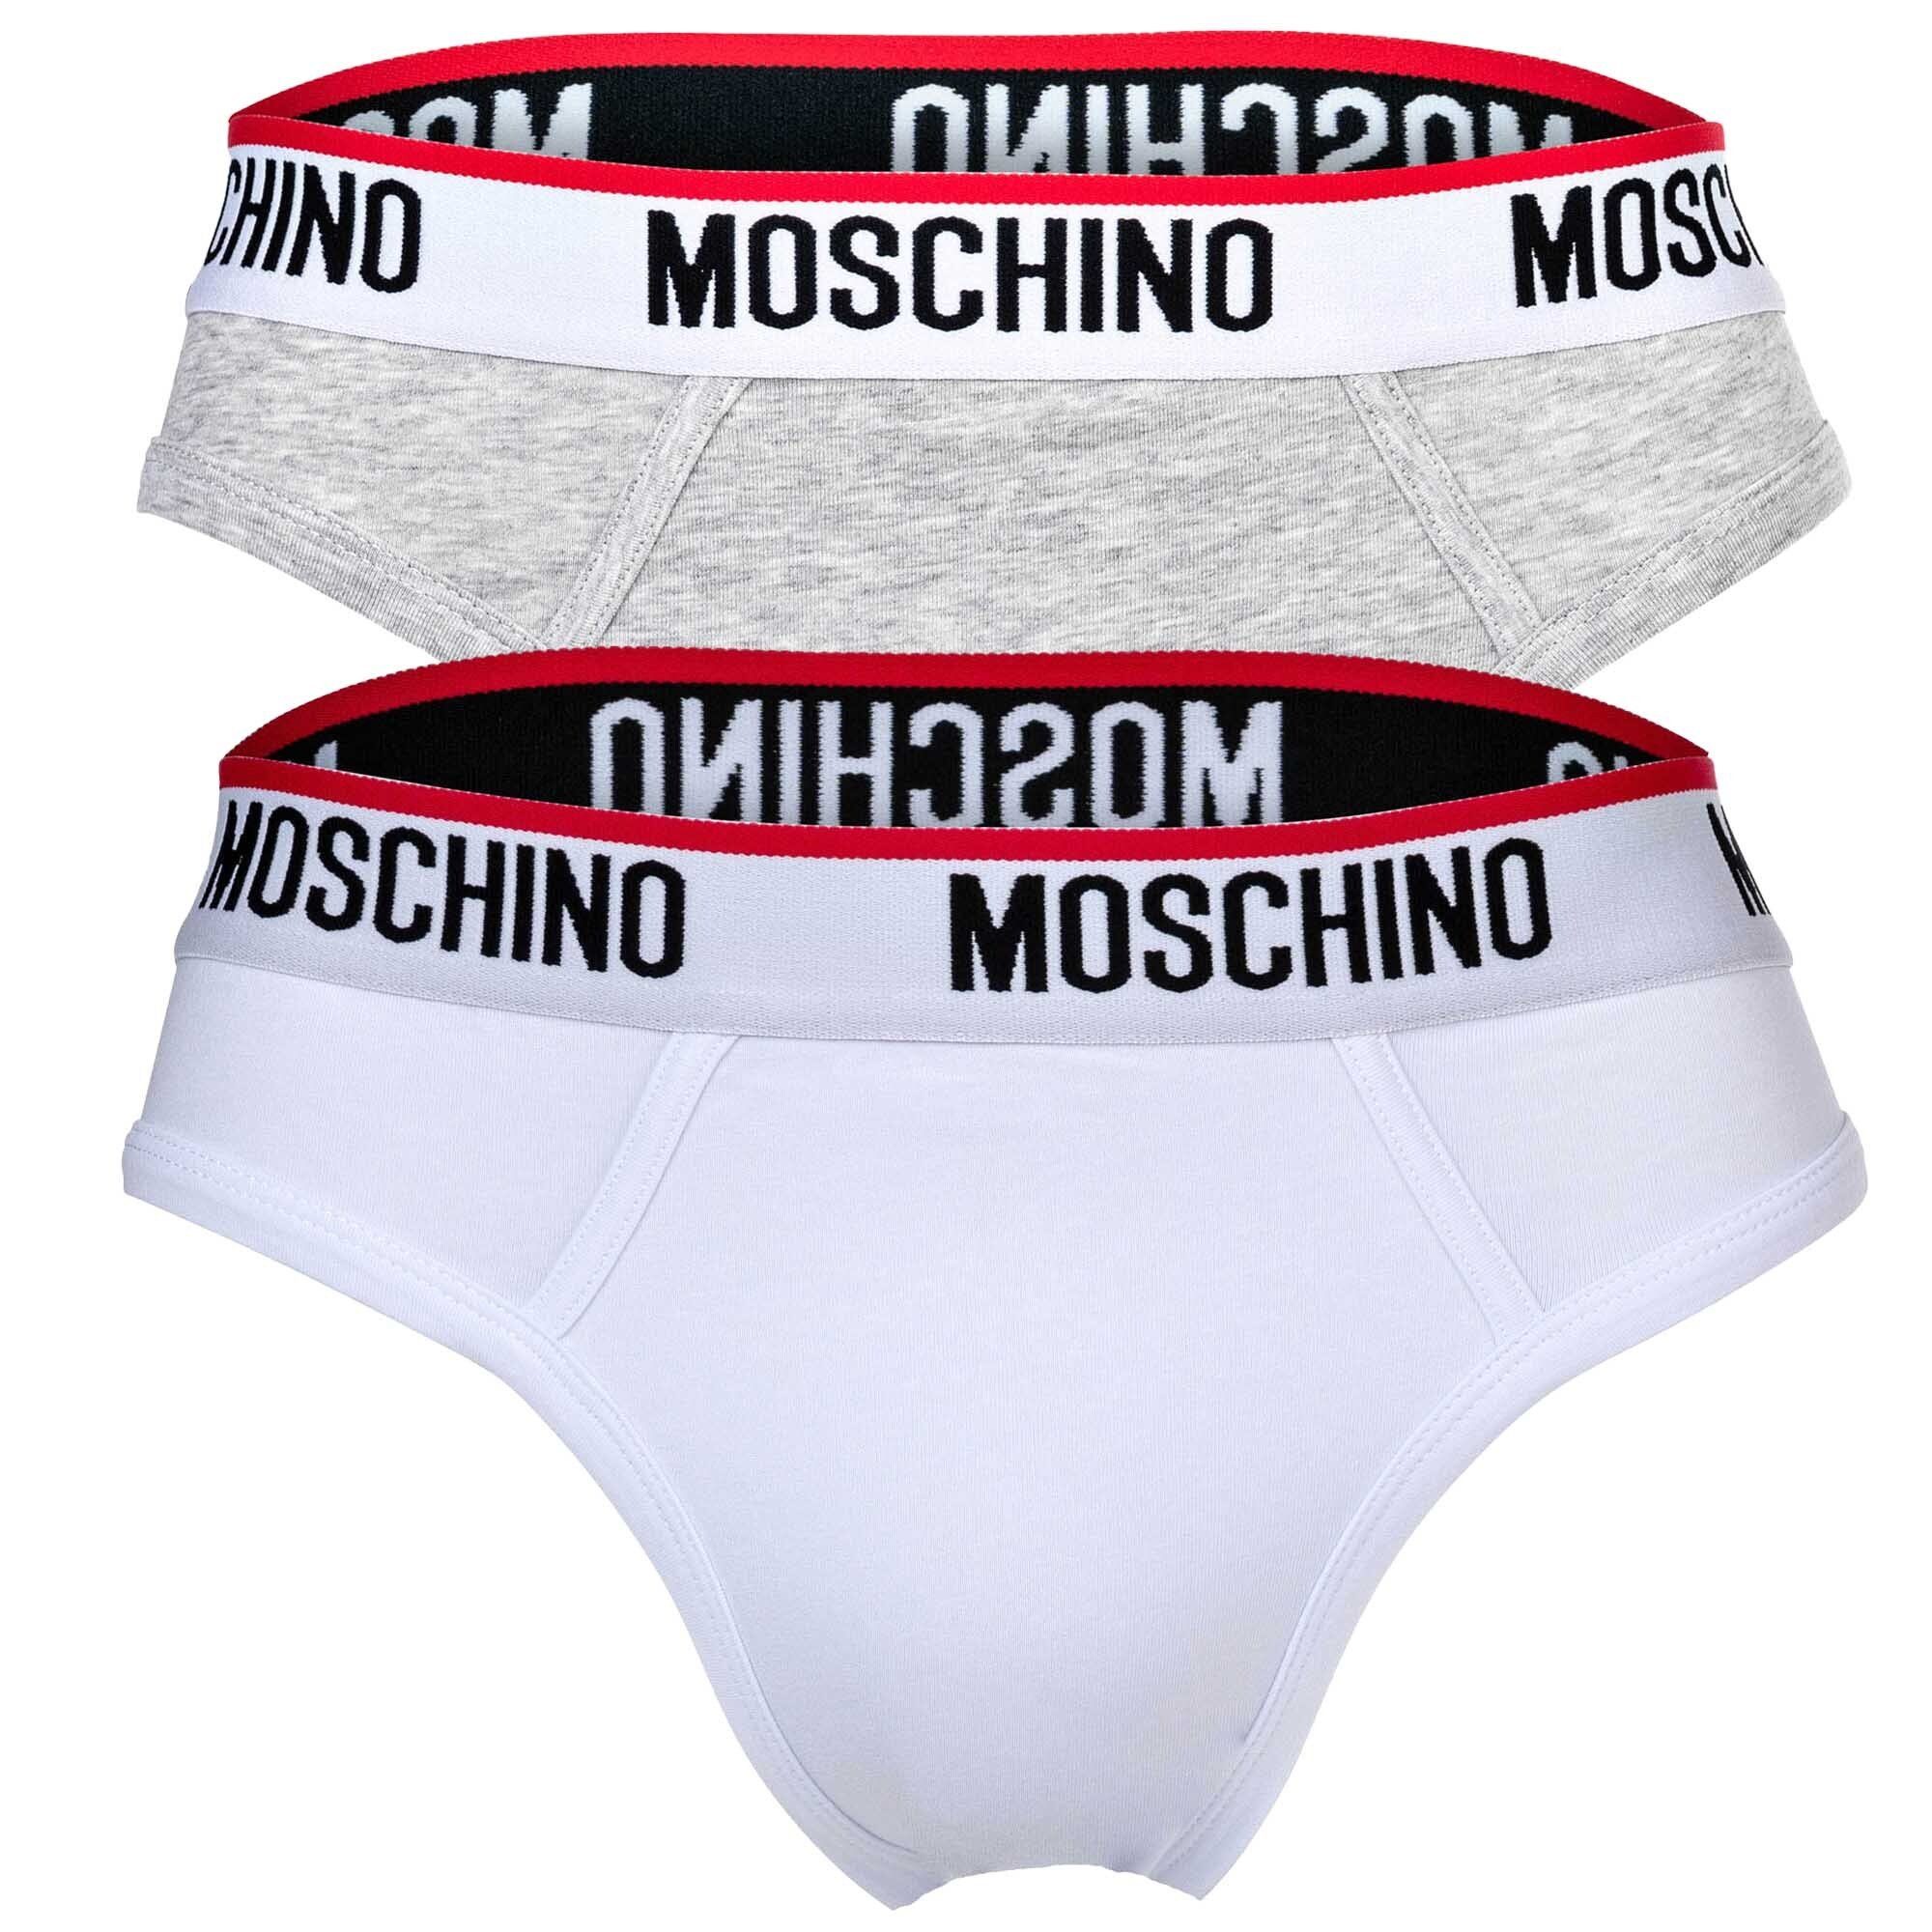 Moschino Slip Herren Micro Slips 2er Pack - Unterhose Grau/Weiß